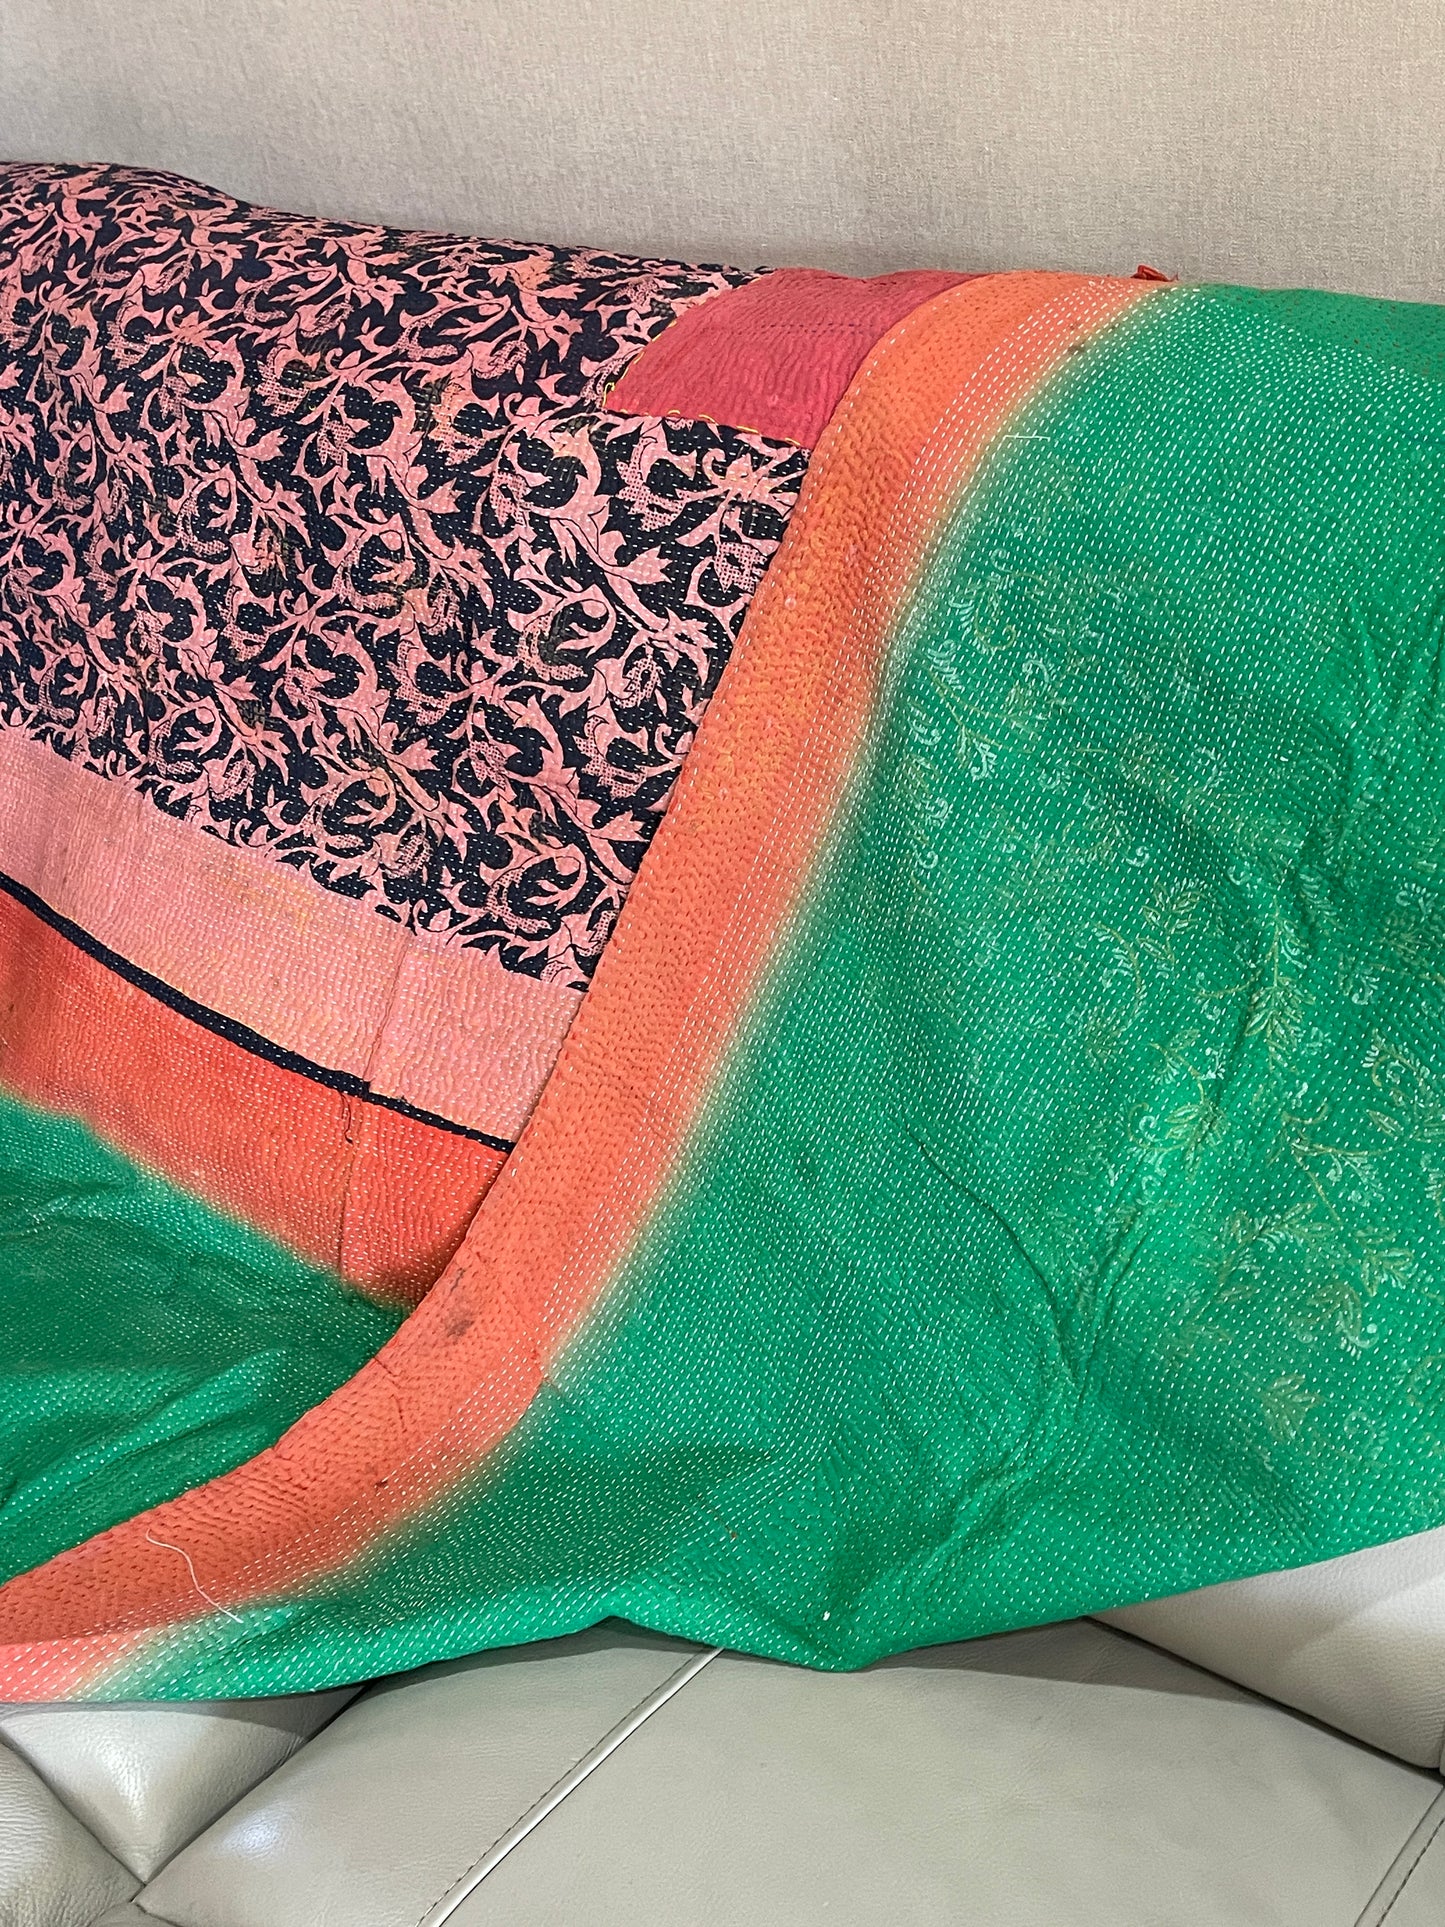 Indian Handmade Cotton Vintage Kantha Quilt Bedspread Throw- Abha